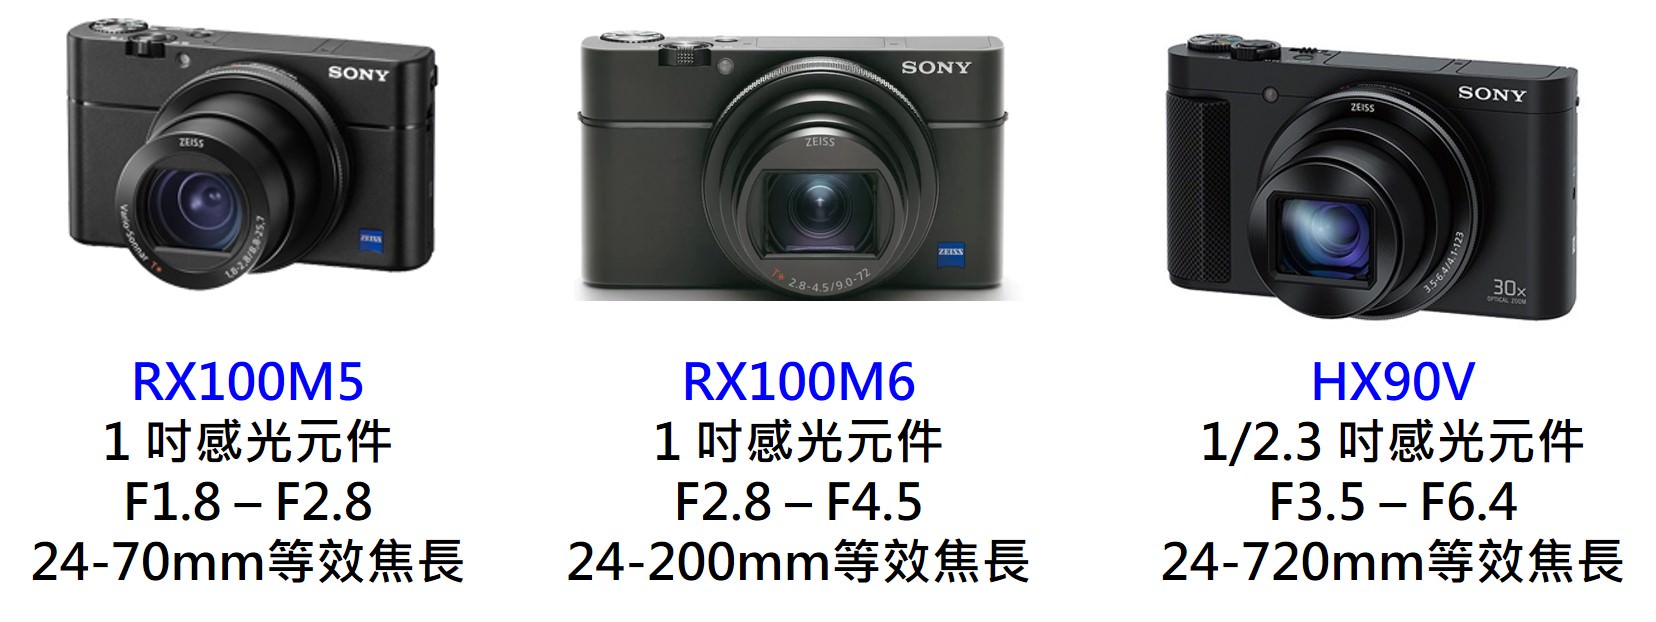 [3C NEWS] Sony RX100VI 發表，F2.8 - F4.5 ，24-200mm 等效焦長上市